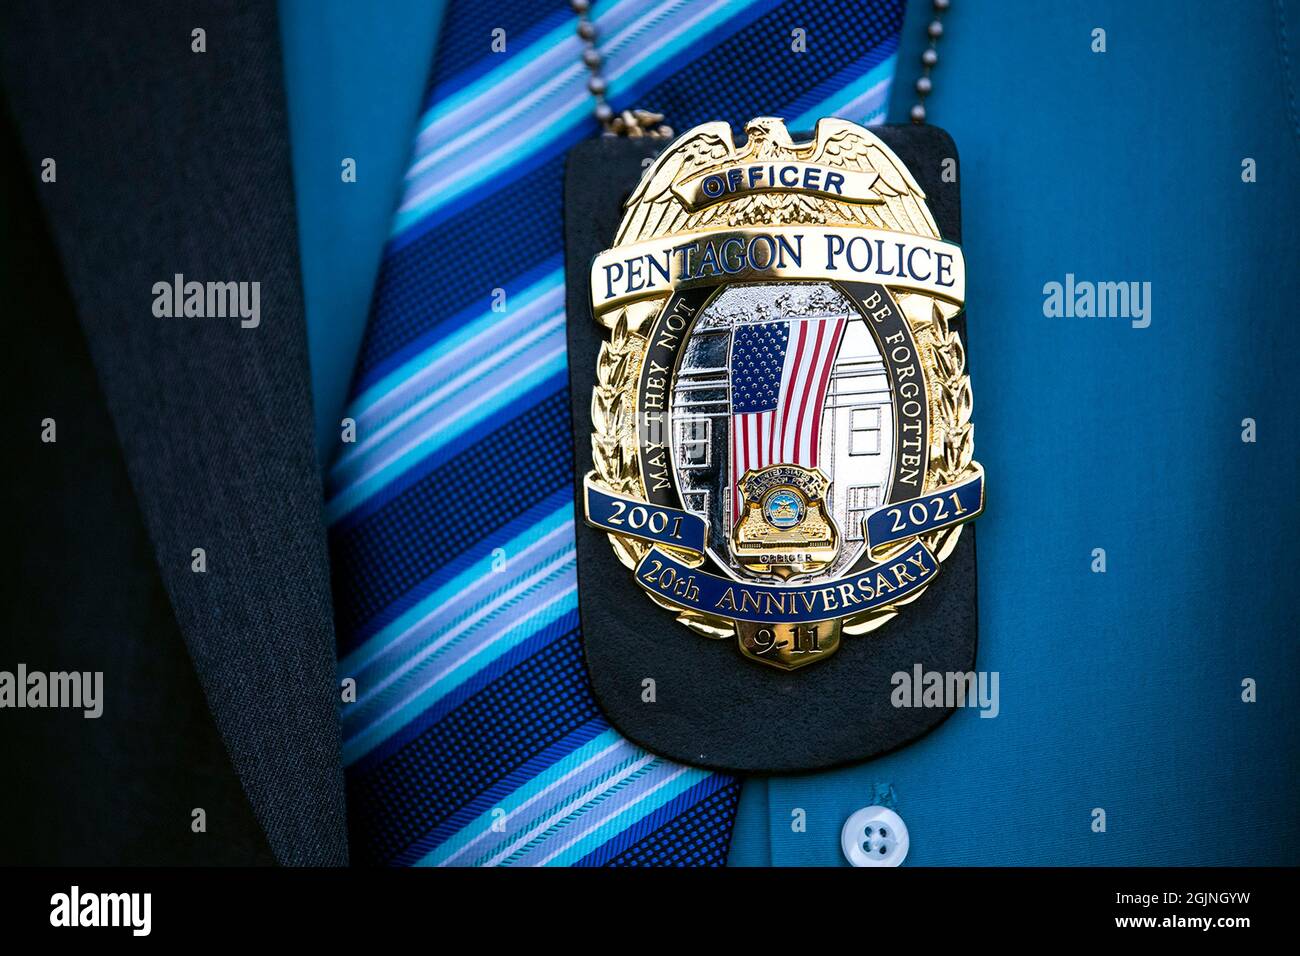 Washington police badge hi-res stock photography and images - Alamy